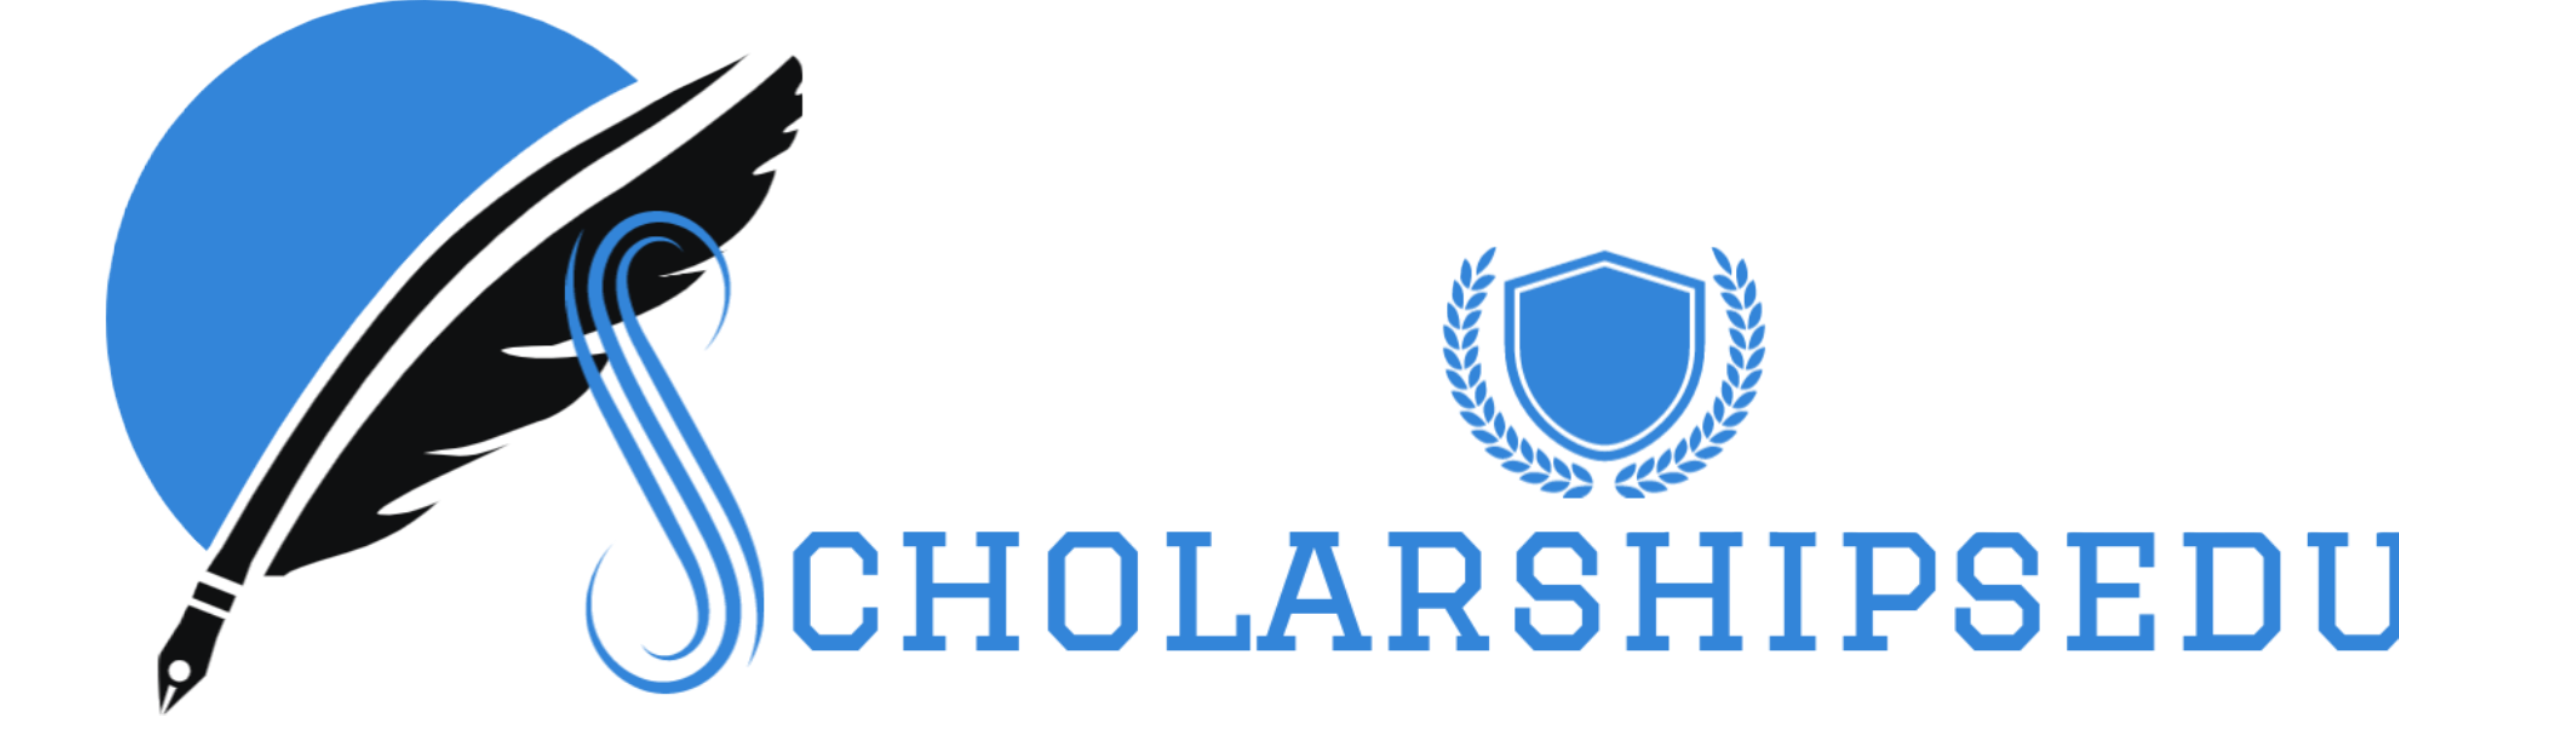 Scholarshipsedu-The key to better education